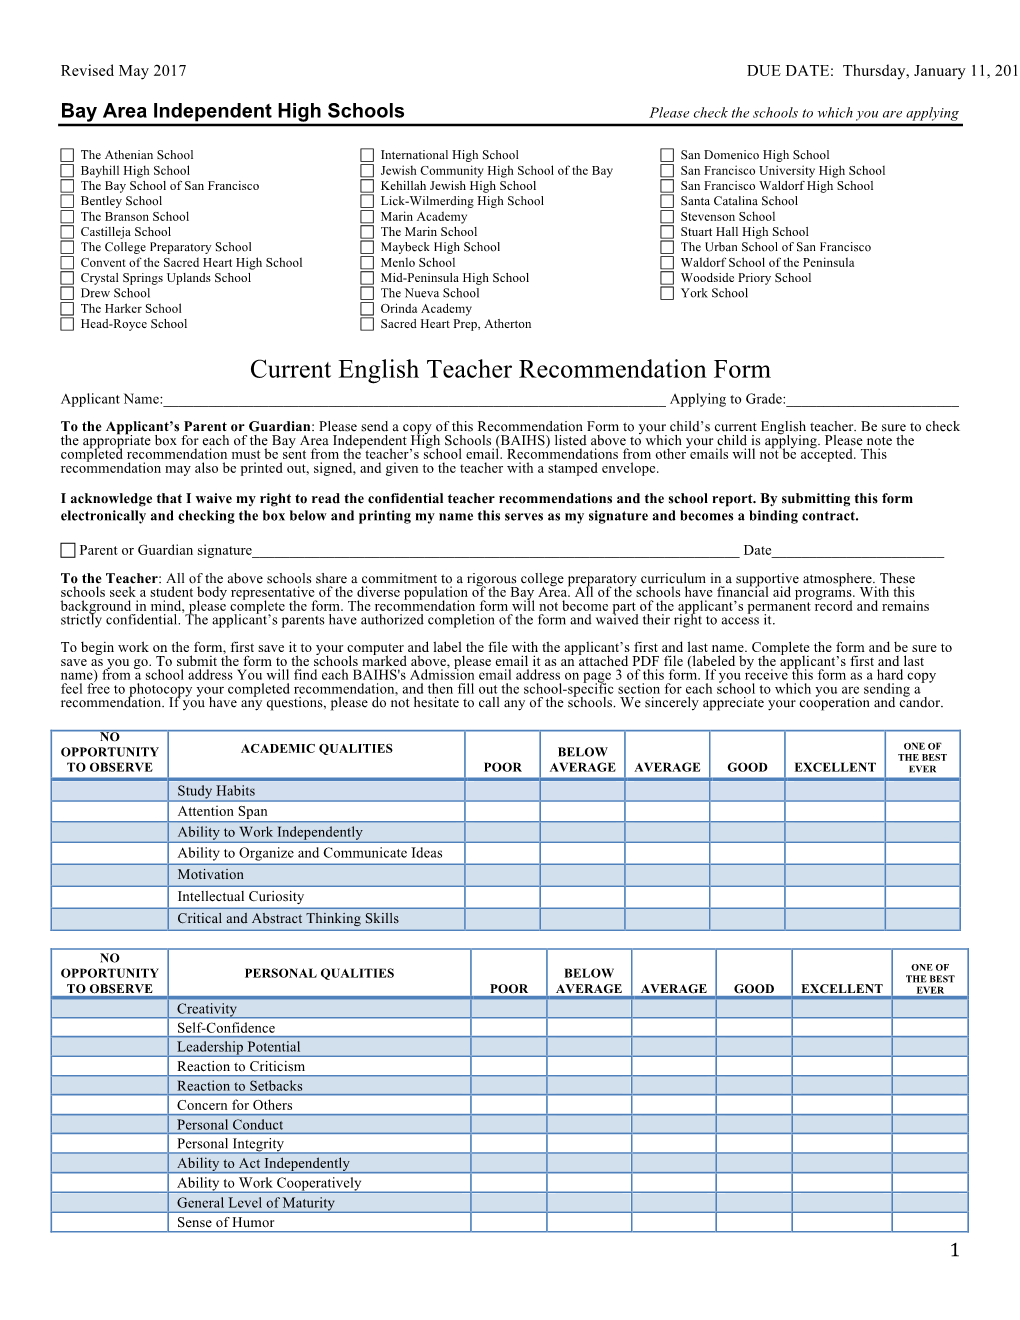 Current English Teacher Recommendation Form